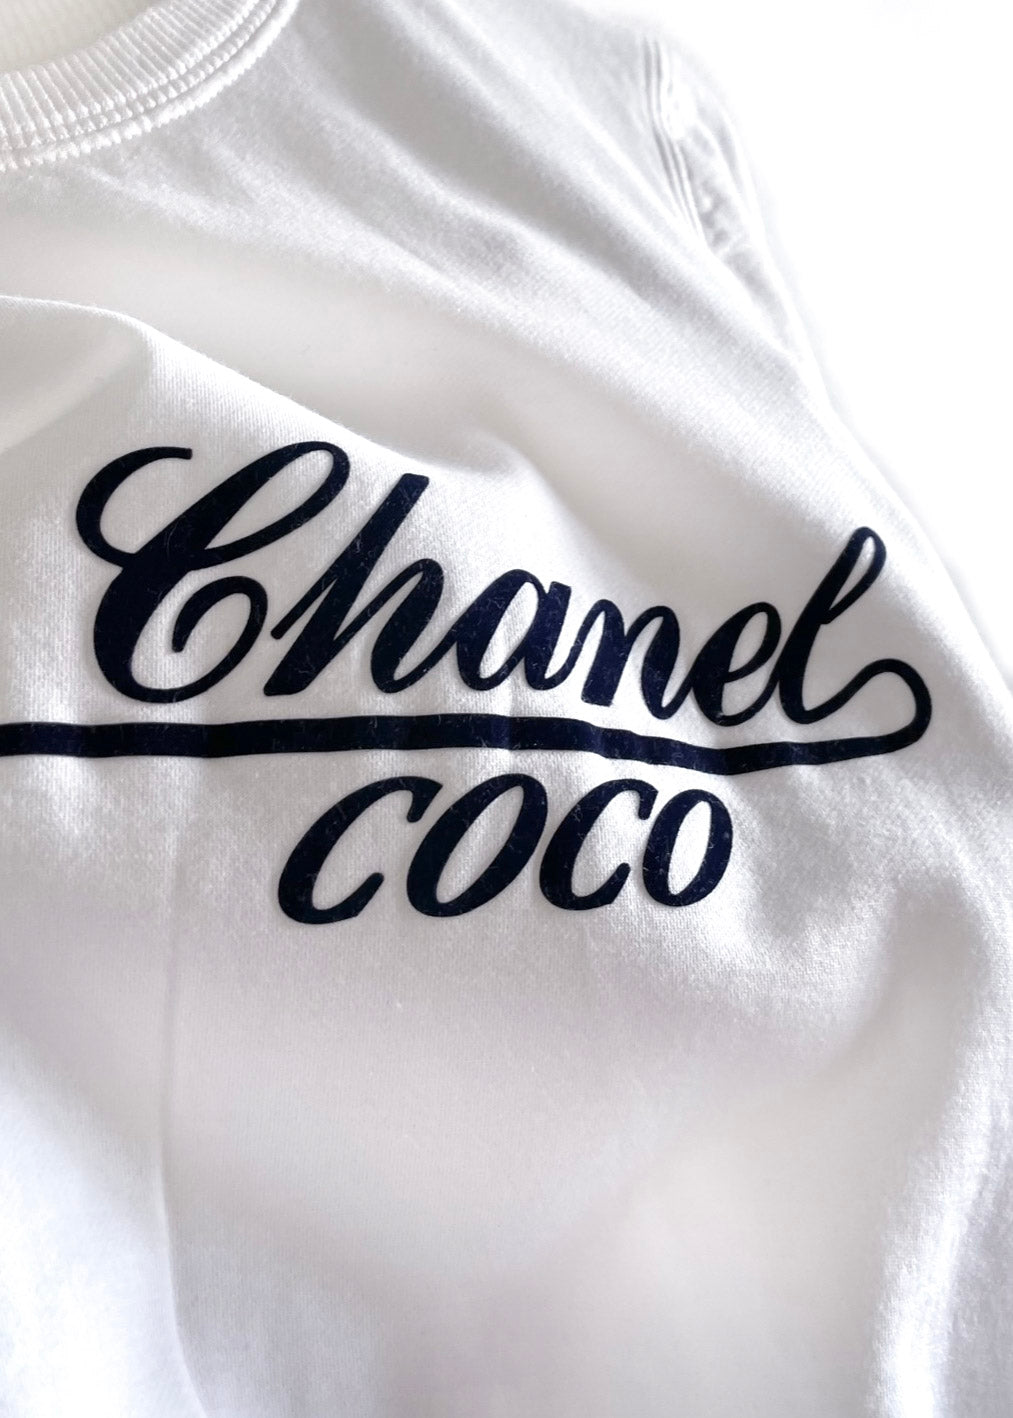 Chanel Pre Owned Women's Cotton Sweatshirts & Hoodies